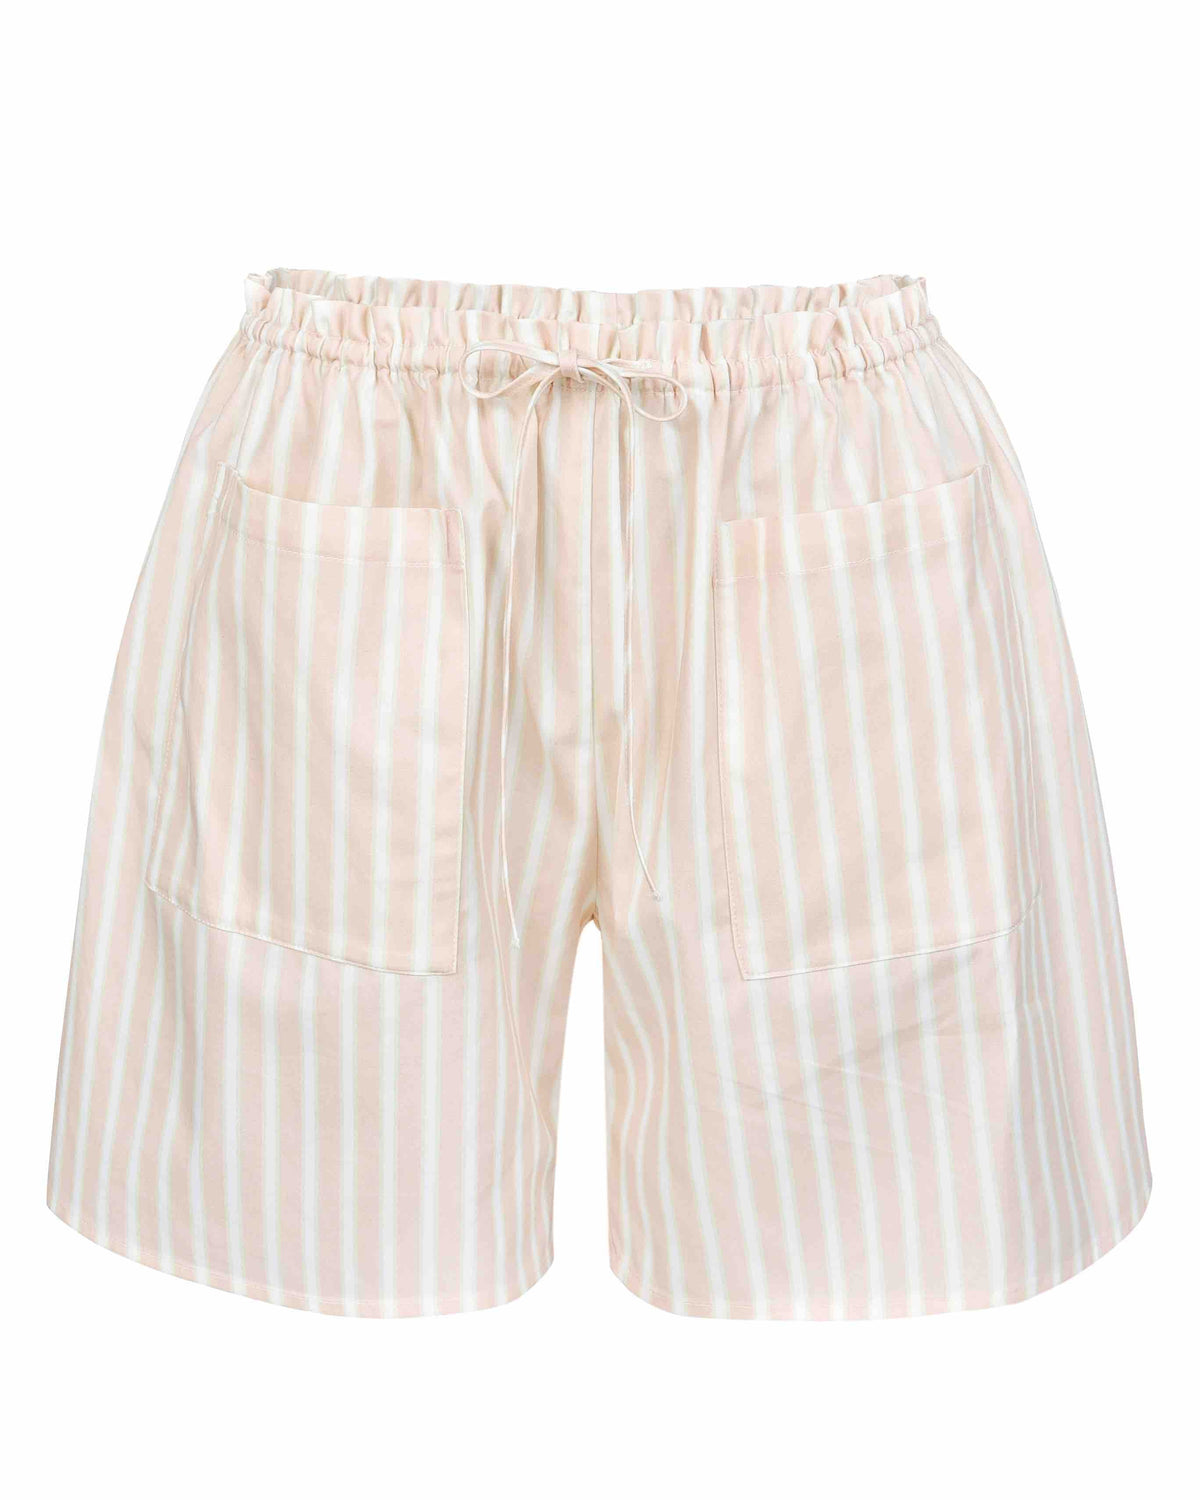 Dream Lounge Shorts - Blush Stripe